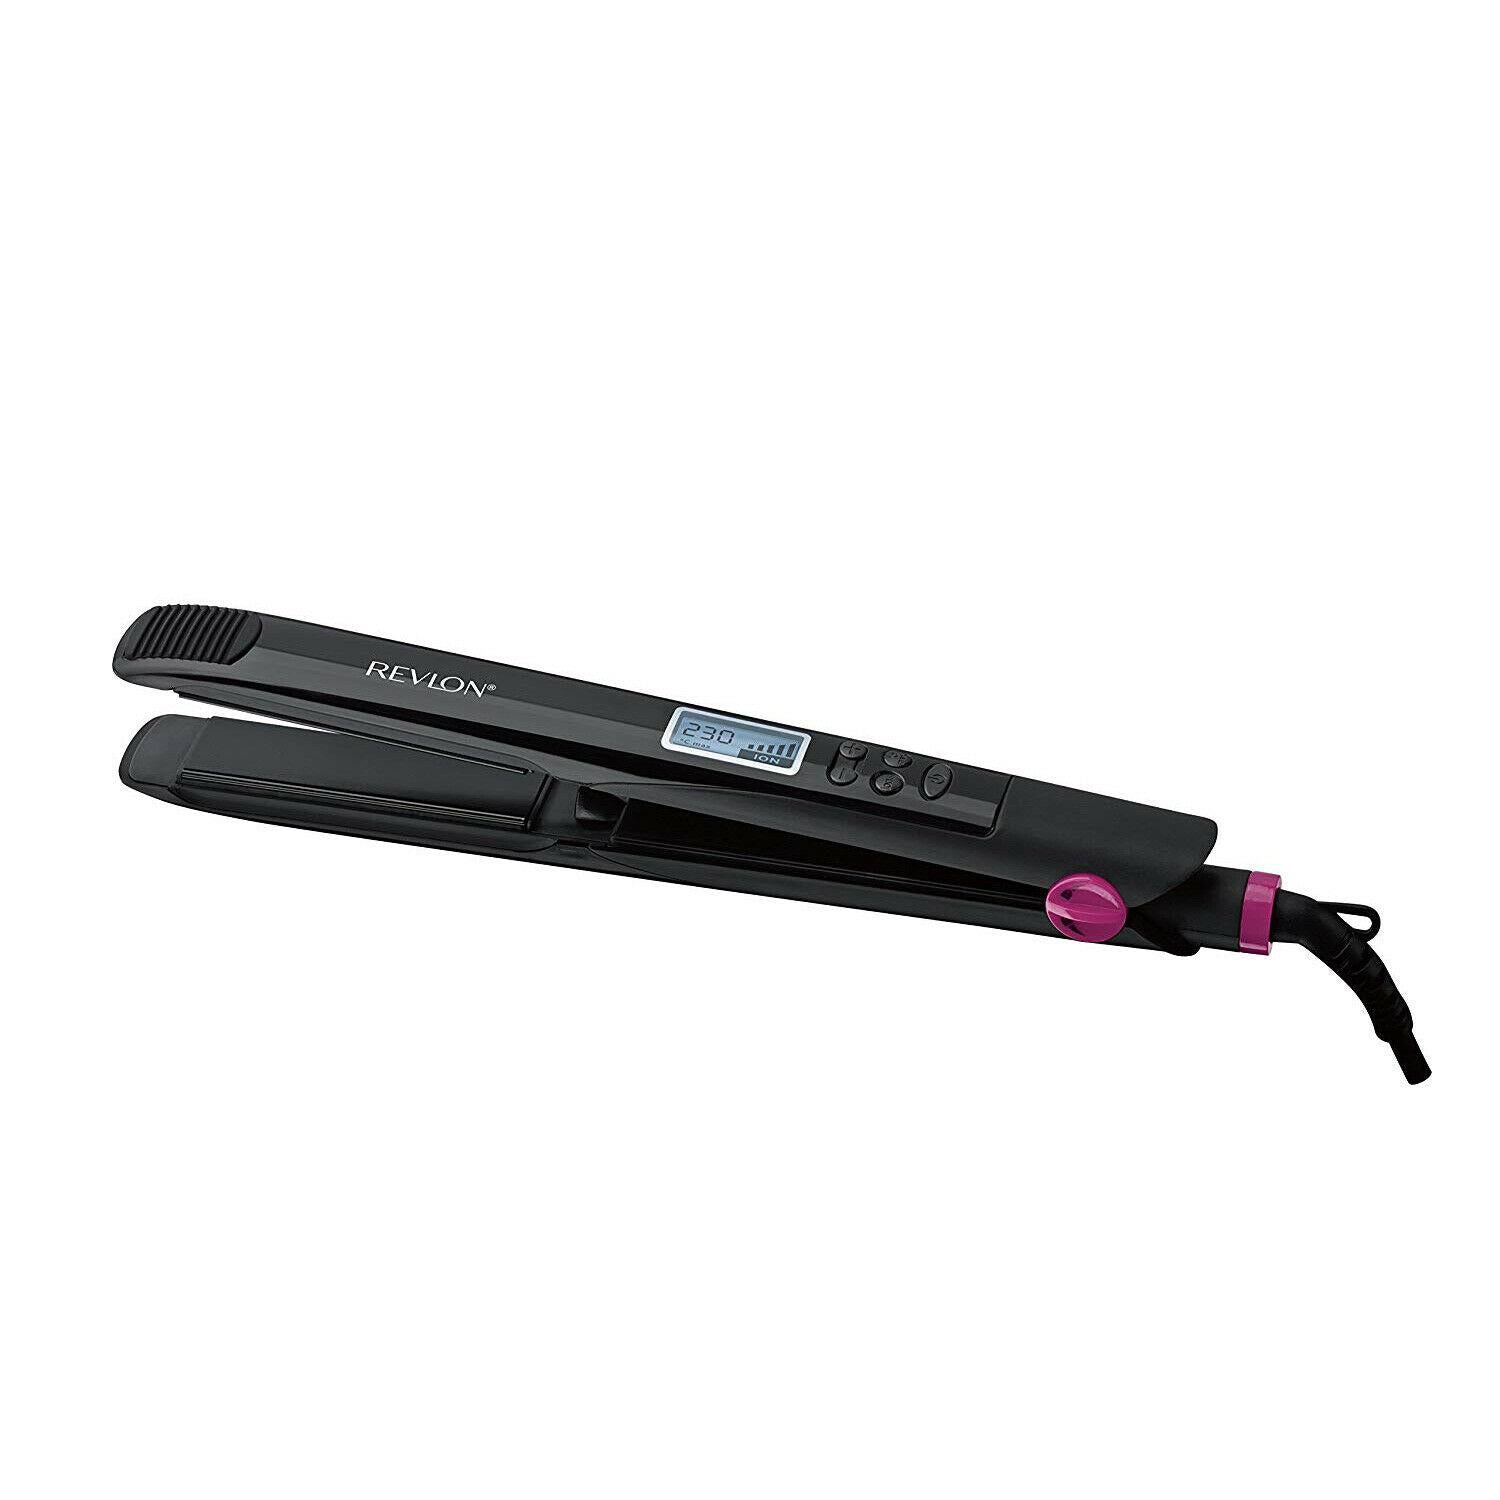 Revlon Hair Straighteners Digital Perfect Straight Heat 230 Degree Digital - RVST2165UK